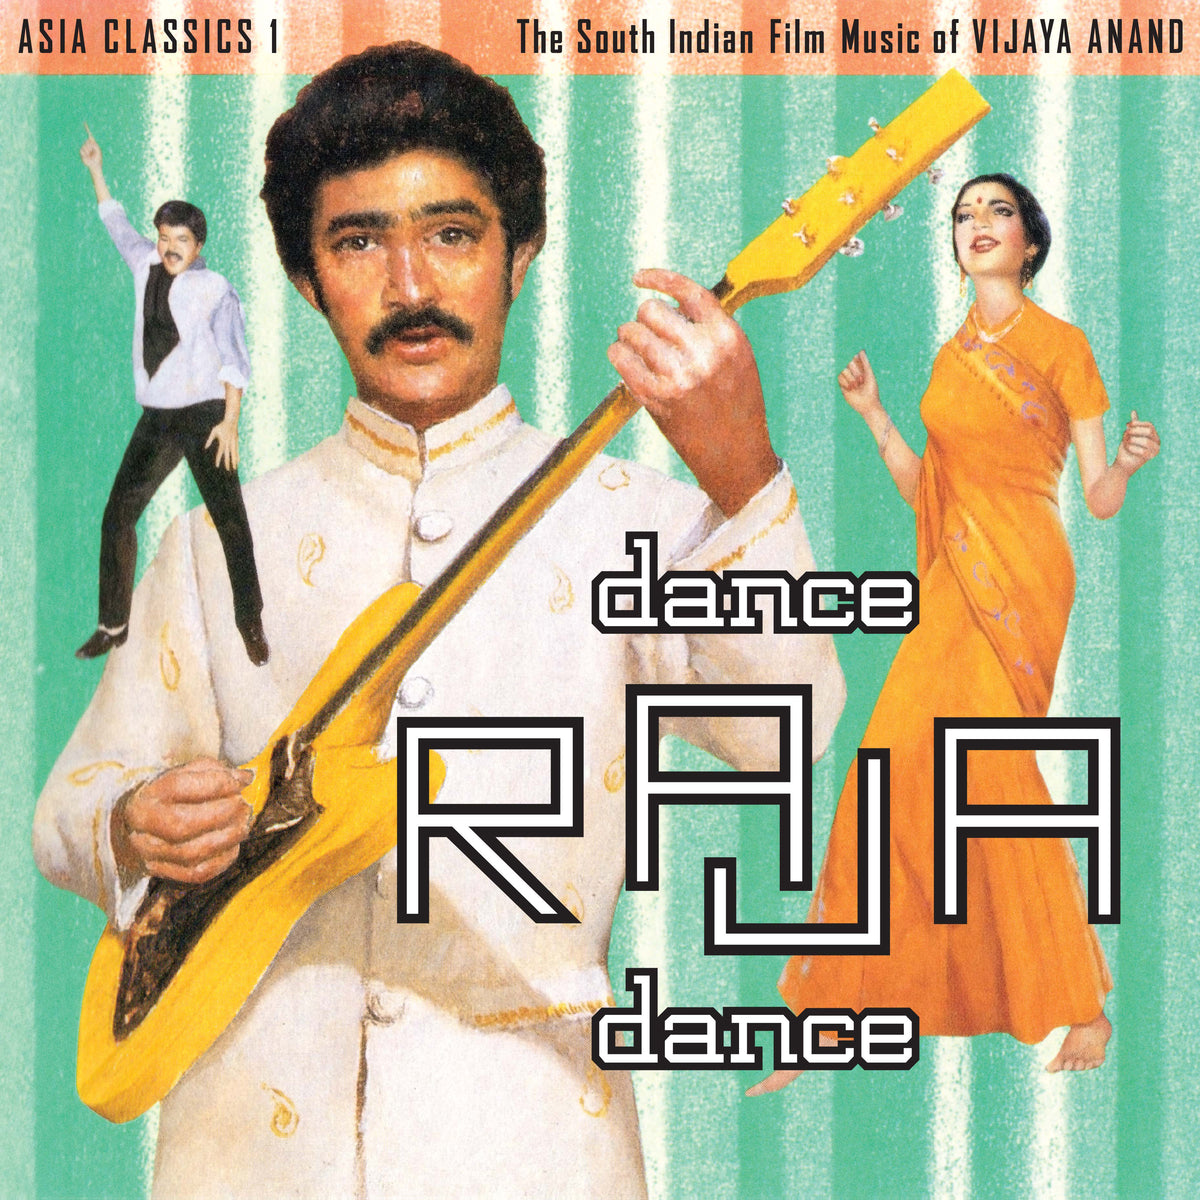 Asia Classics : The South Indian Film Music of Viajaya Anand - Dance Raja Dance